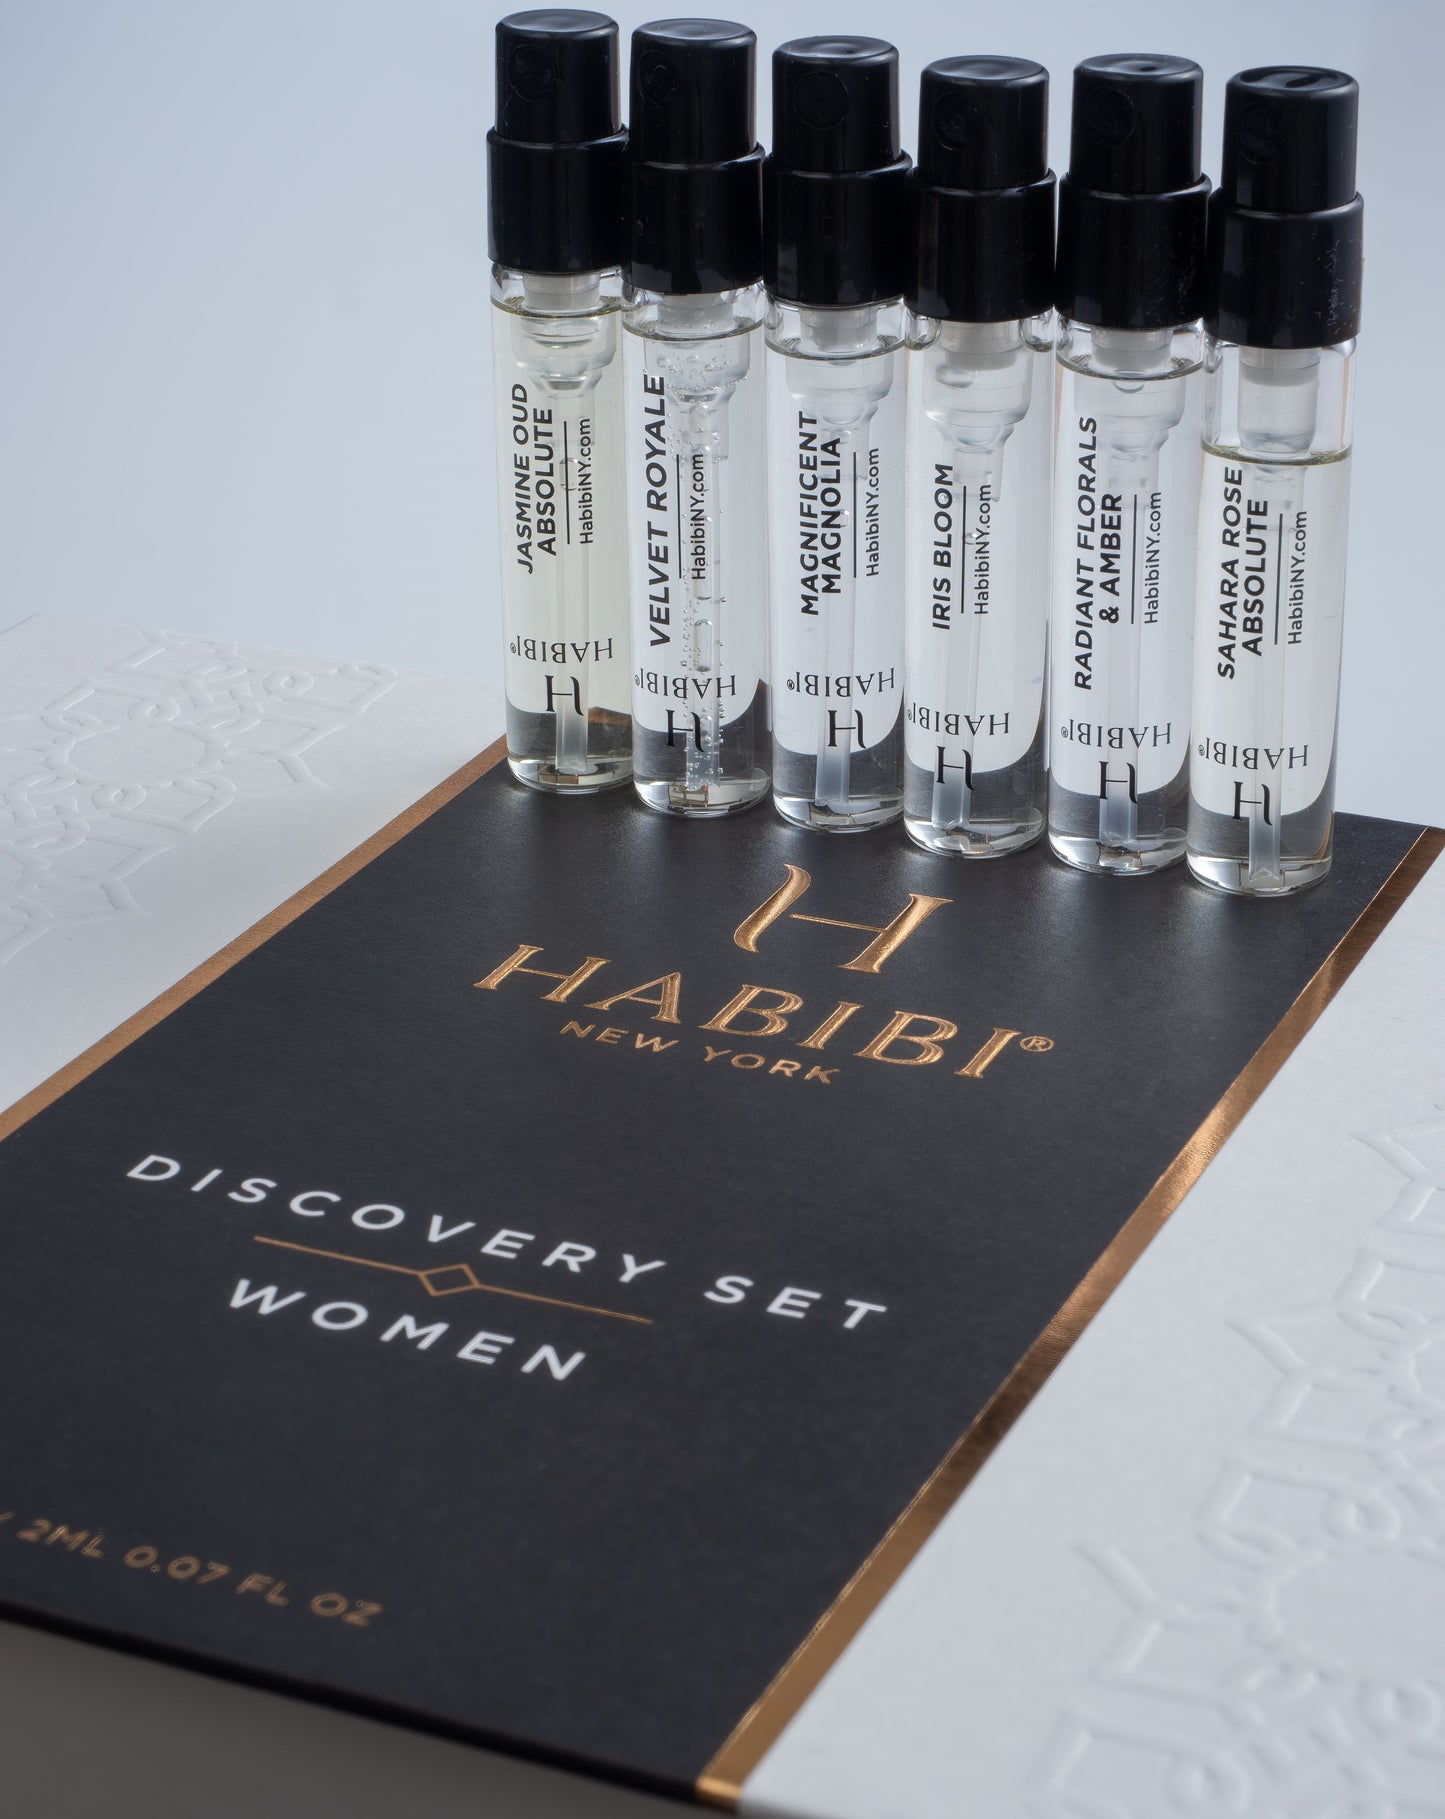 Women's Fragrances Discovery Sample Set